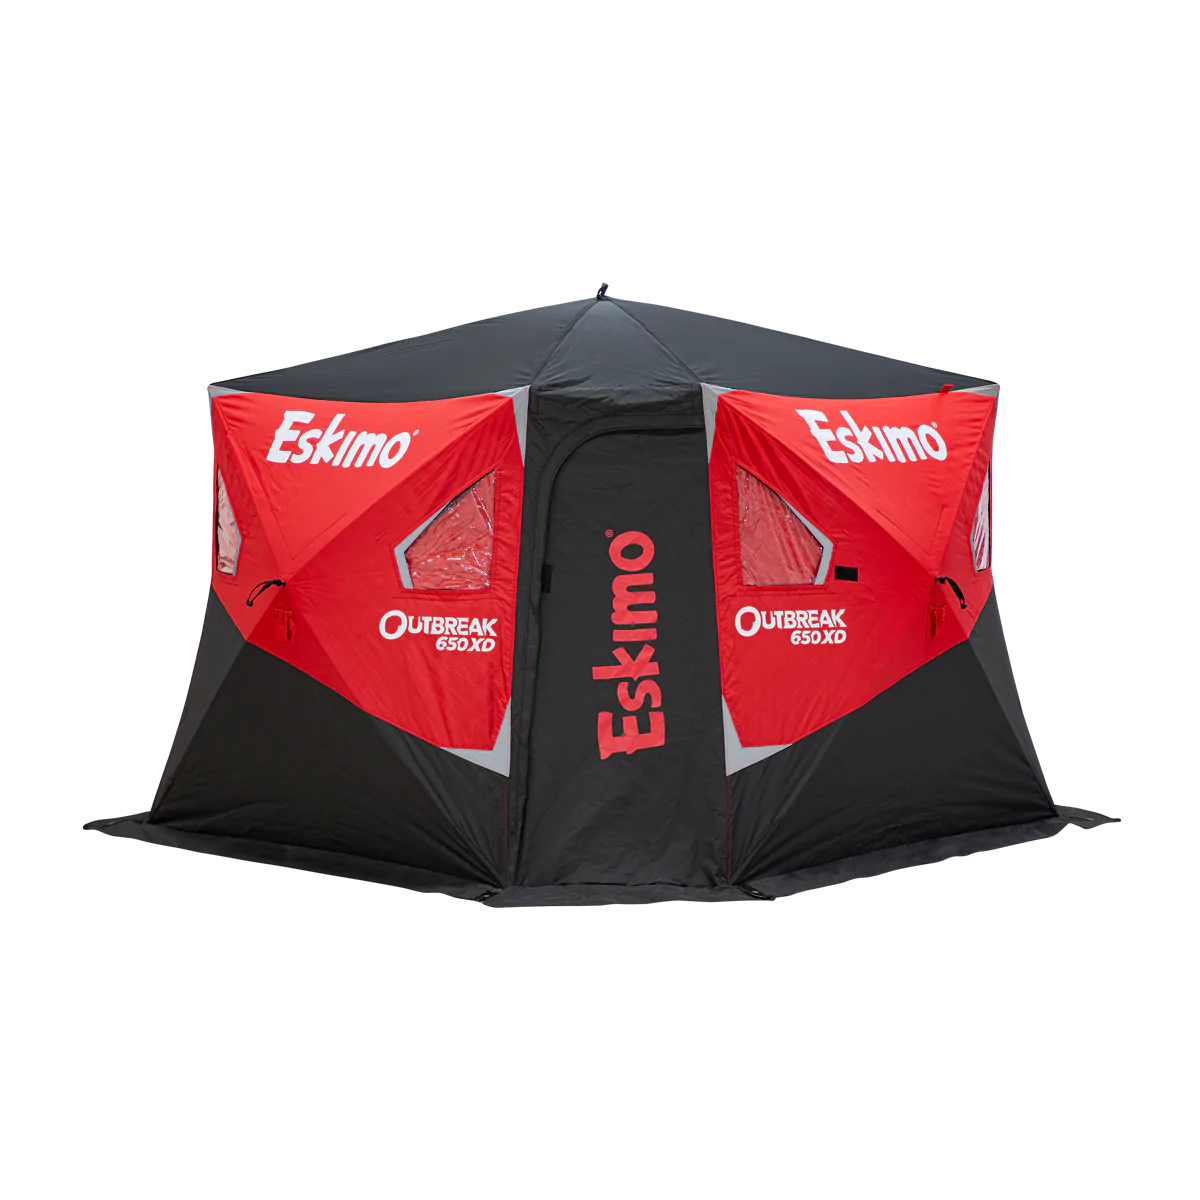 Tente OutBreak 650xd-Eskimo